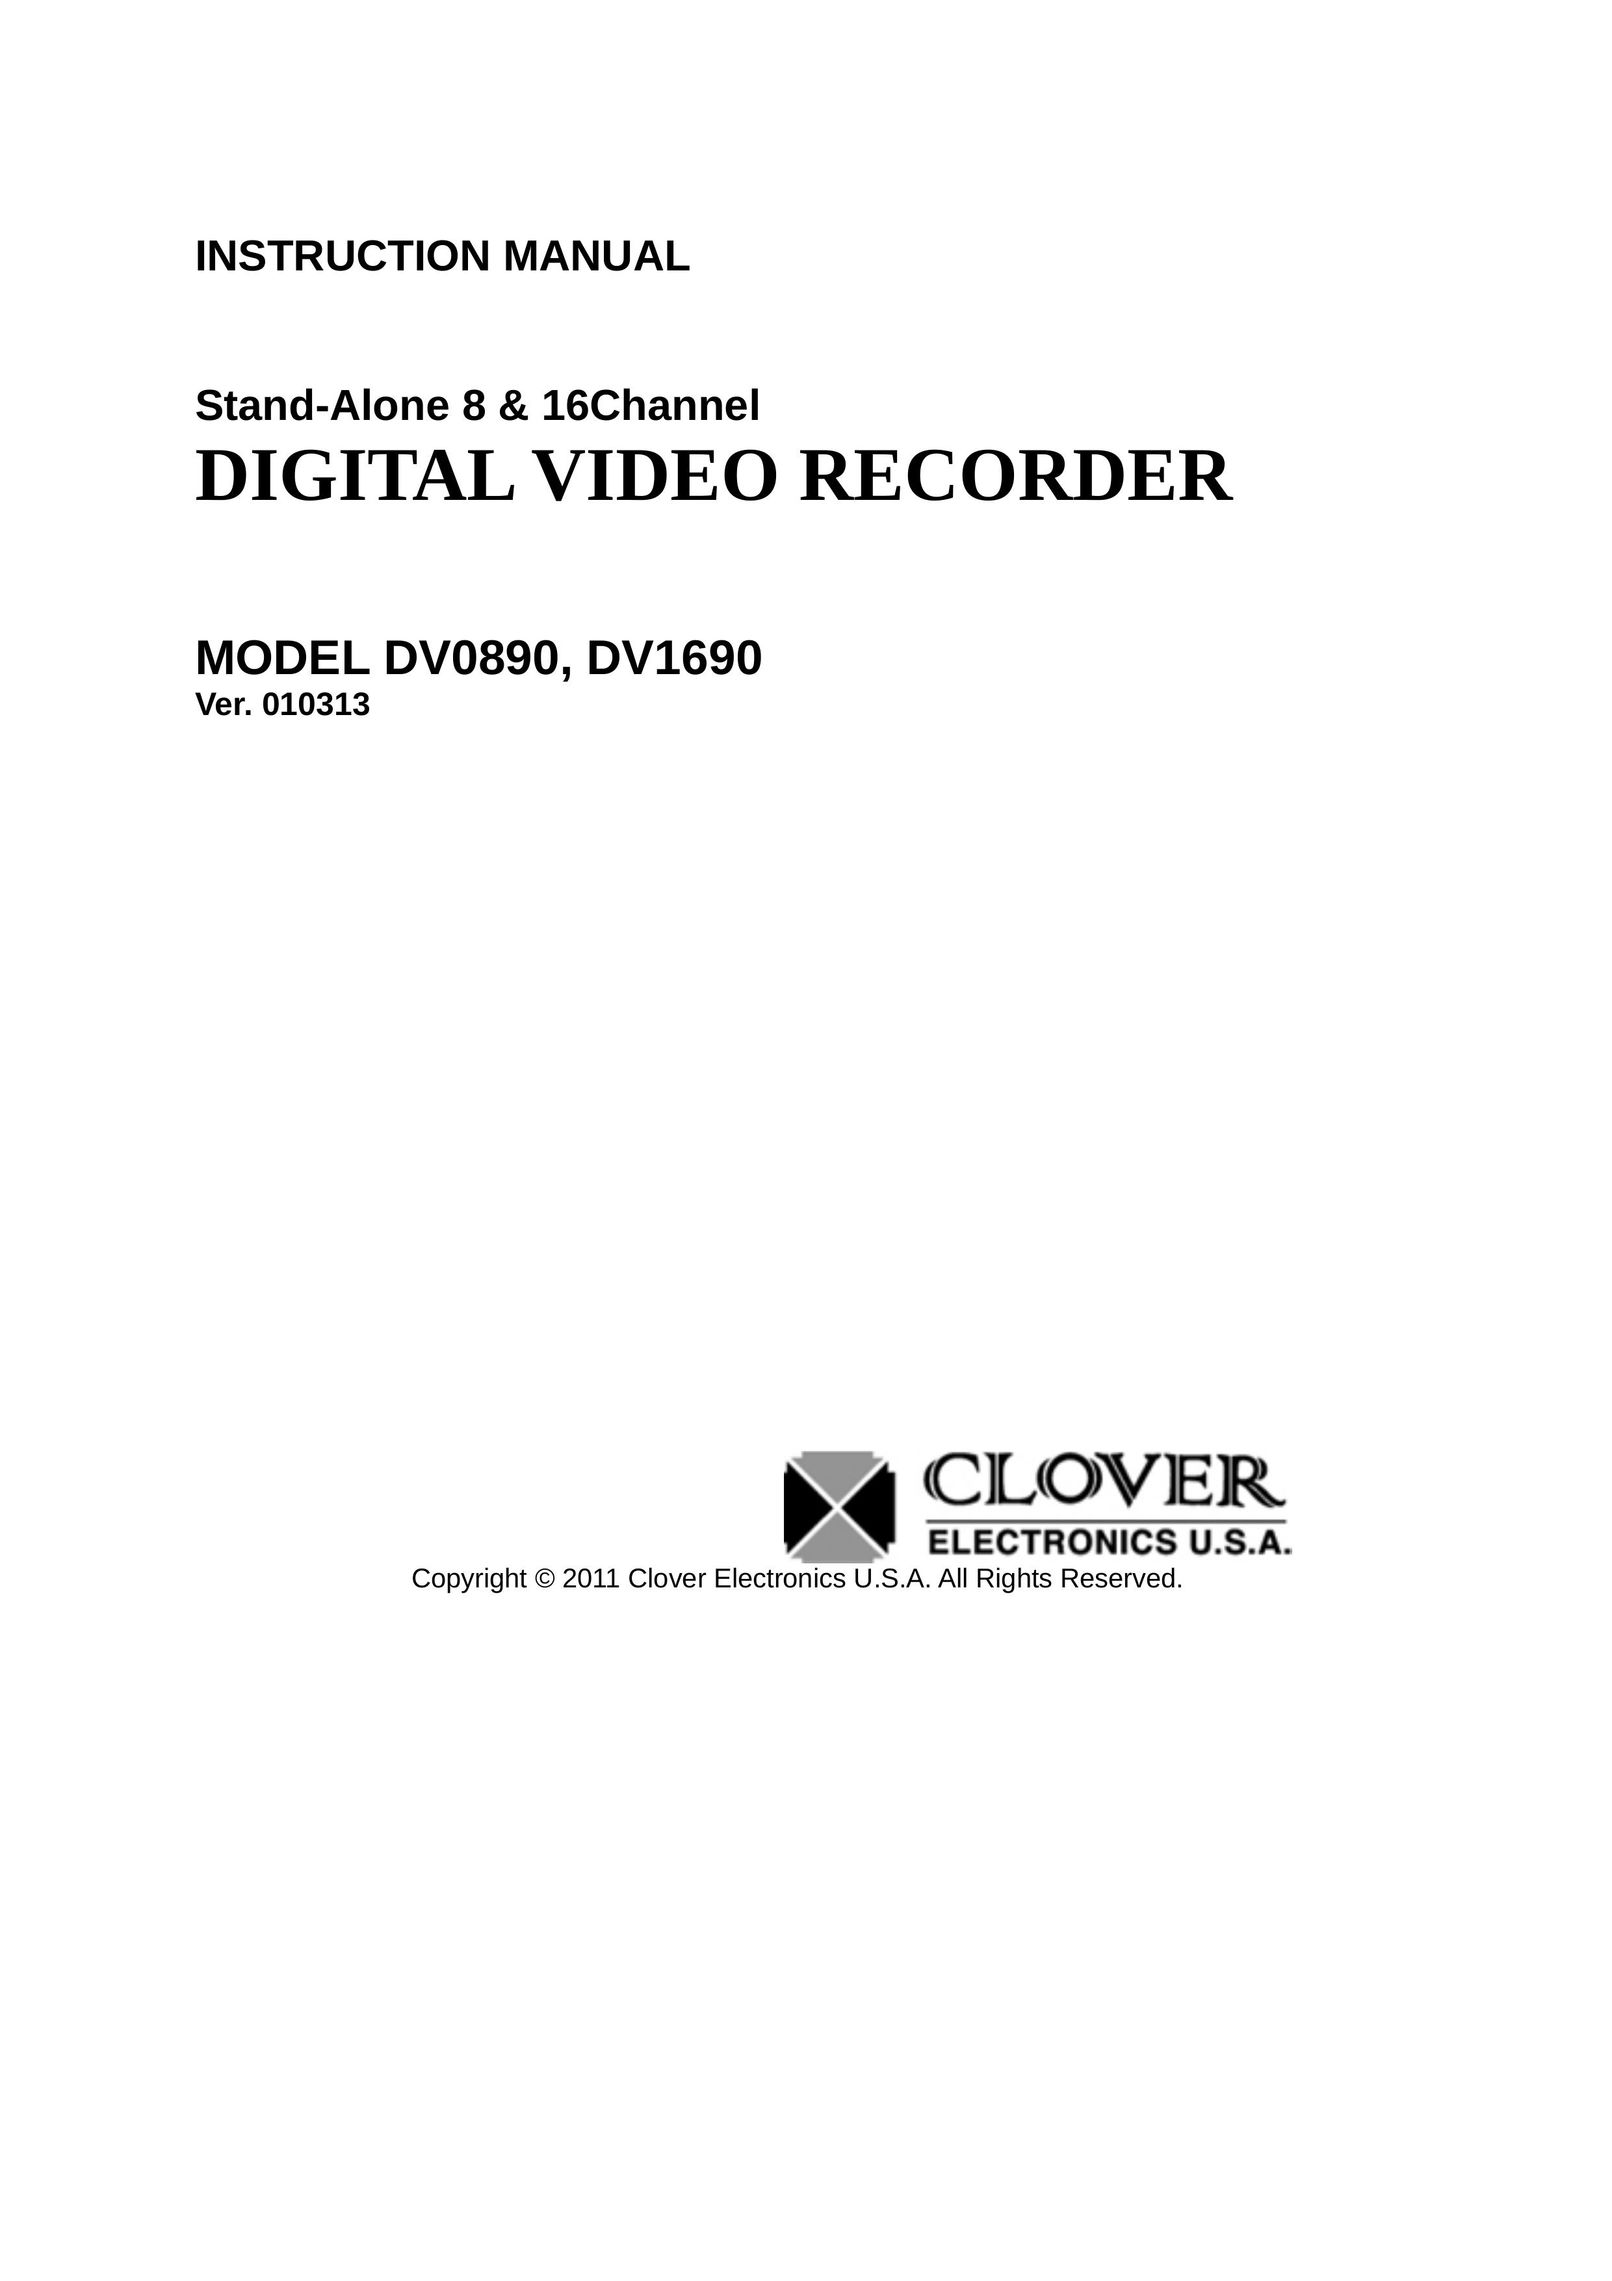 Clover Electronics DV0890 DVR User Manual